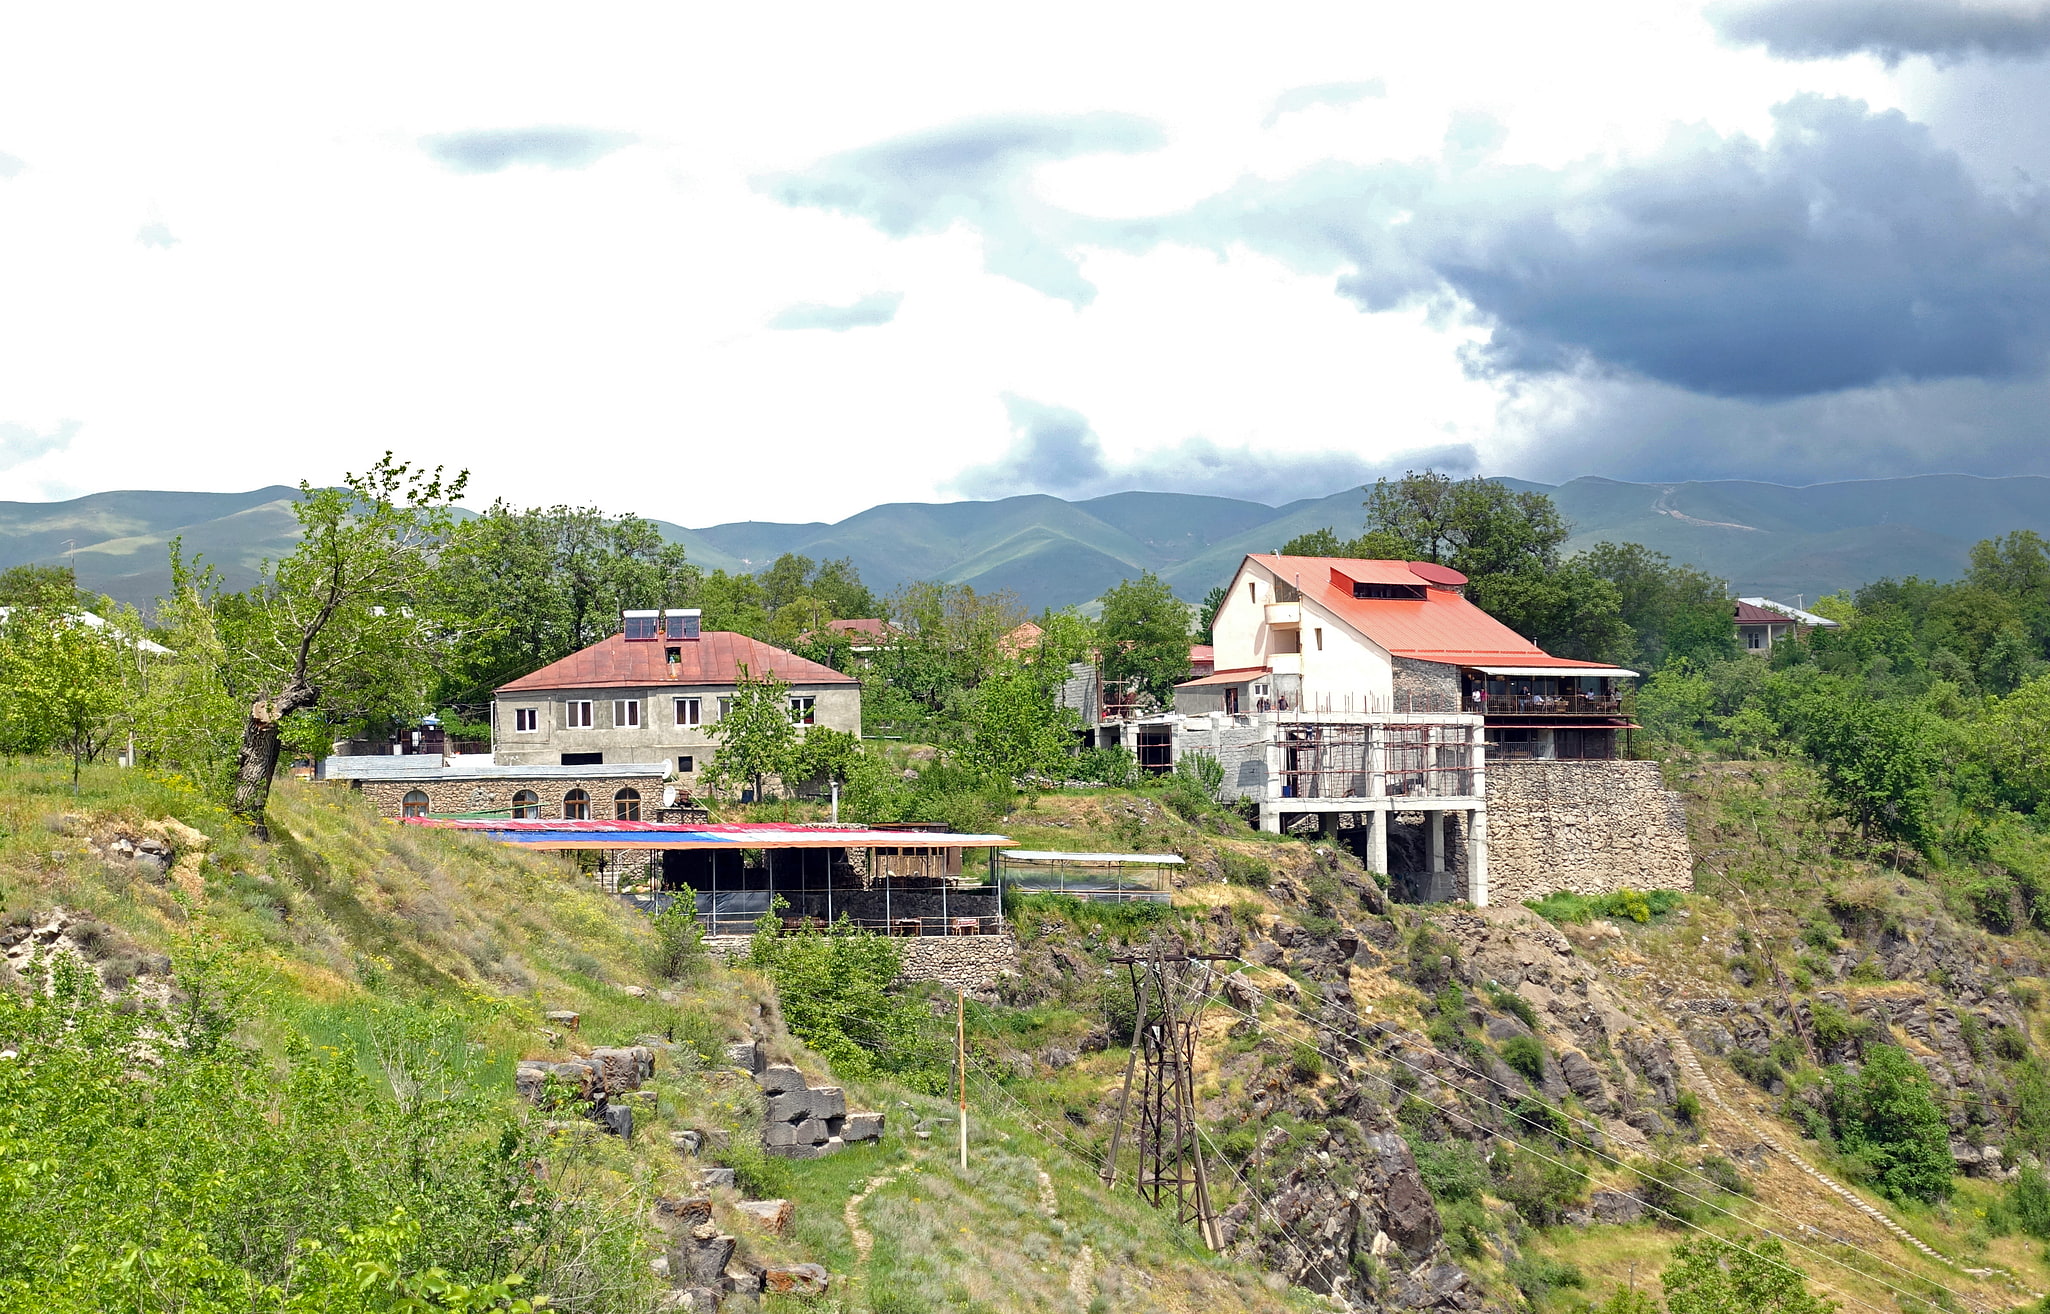 Garni, Armenia